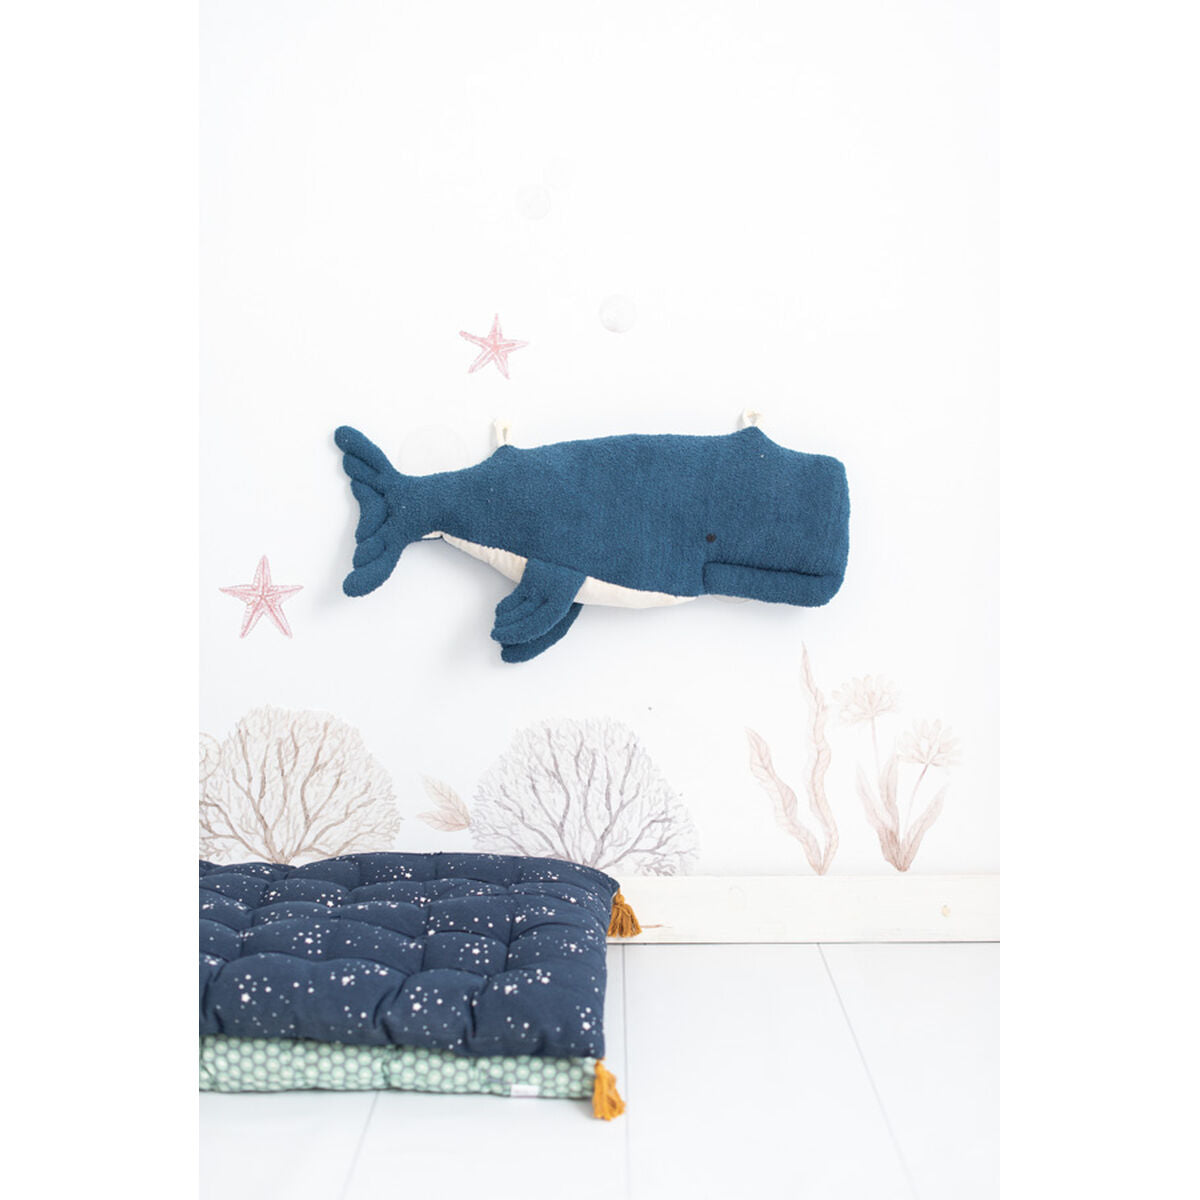 Fluffy toy Crochetts OCÉANO Blue Whale 28 x 75 x 12 cm 2 Pieces